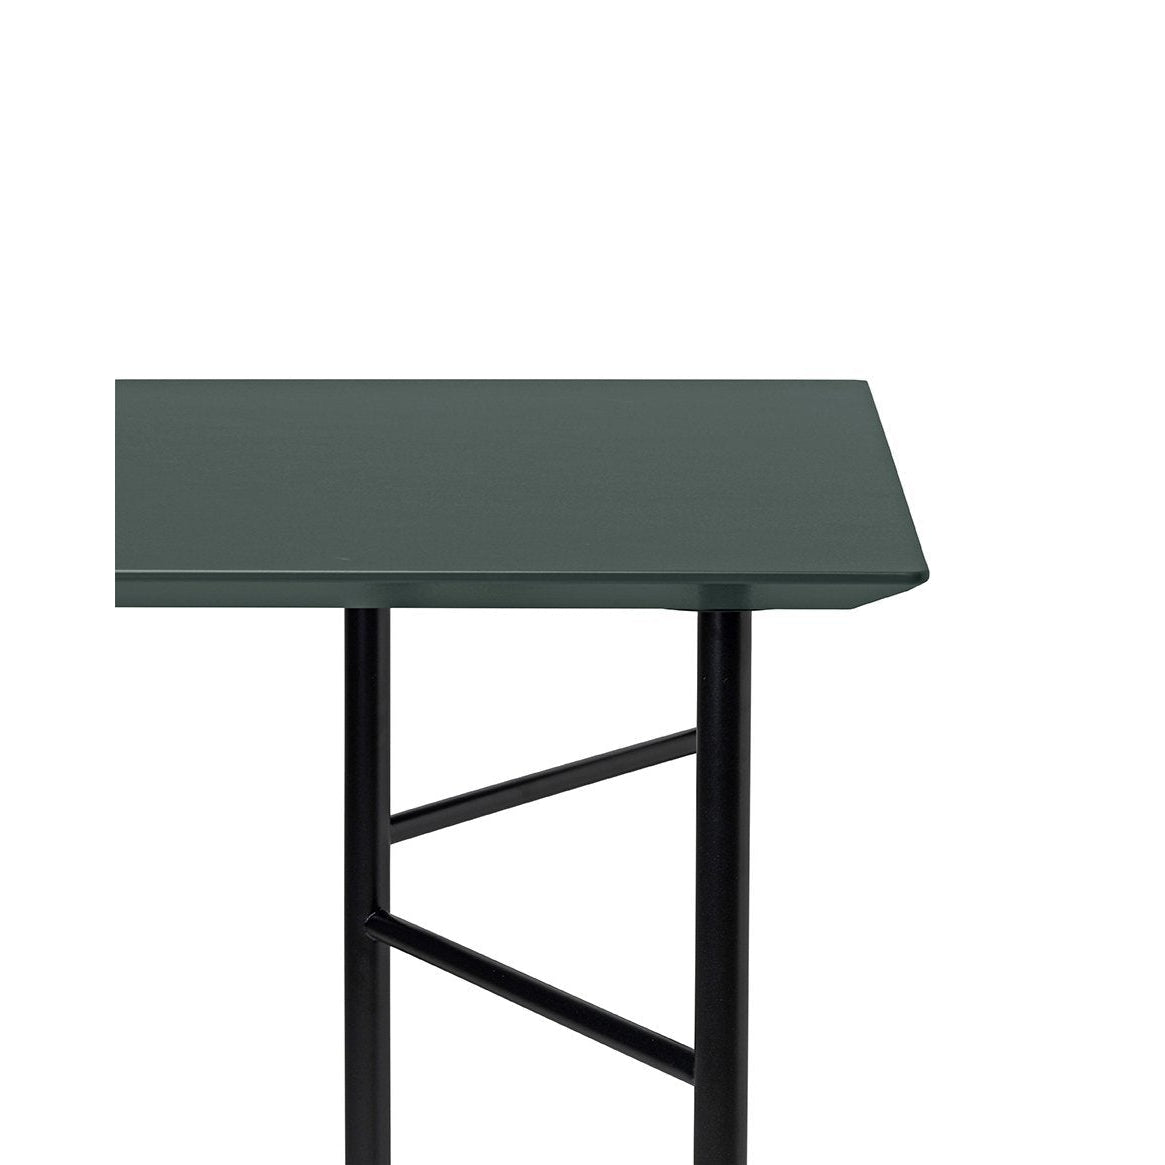 Ferm Living Mingle Desk Top, Green, 135 Cm